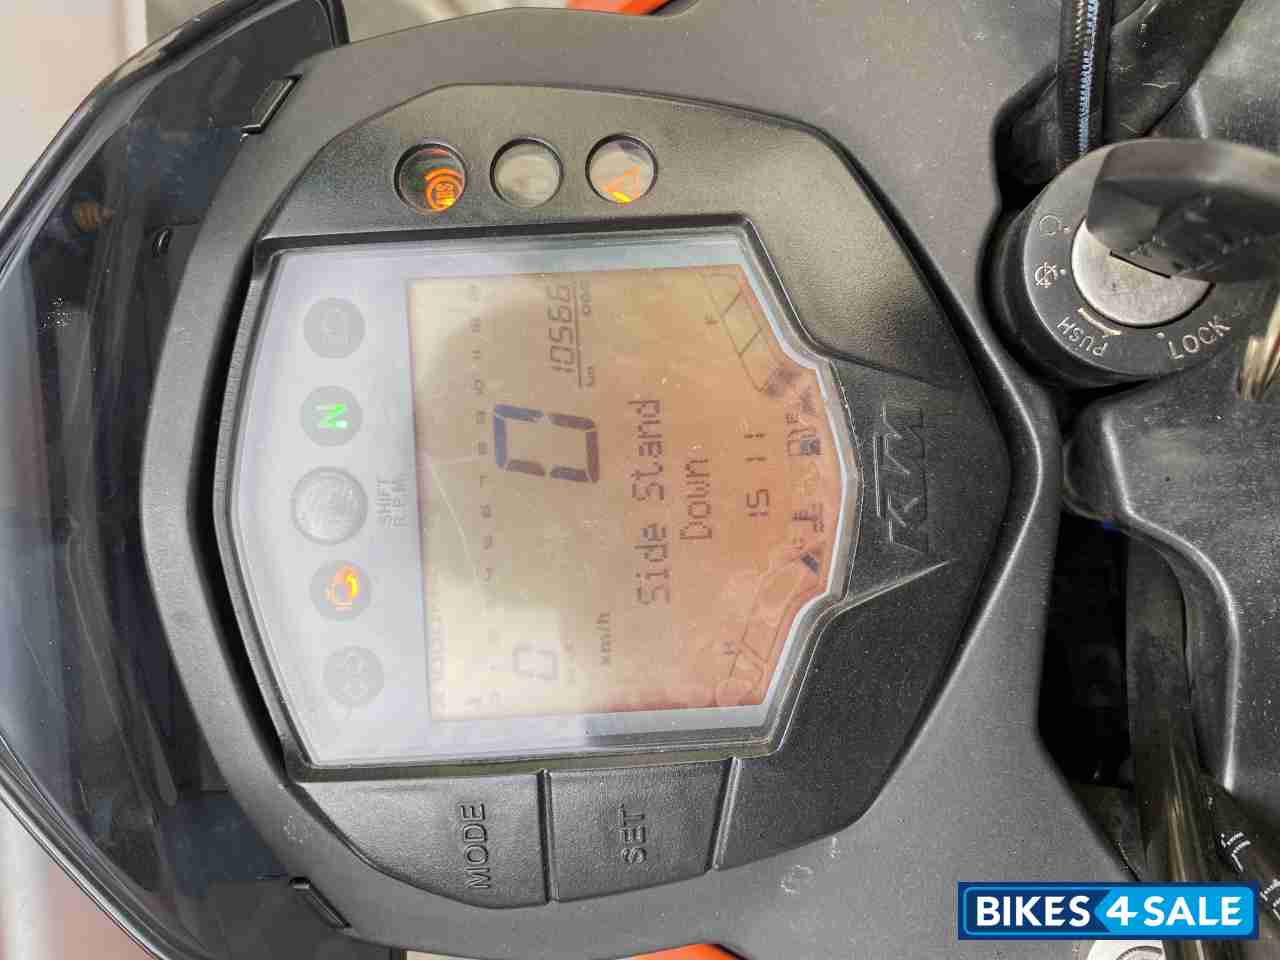 Orange KTM Duke 200 ABS